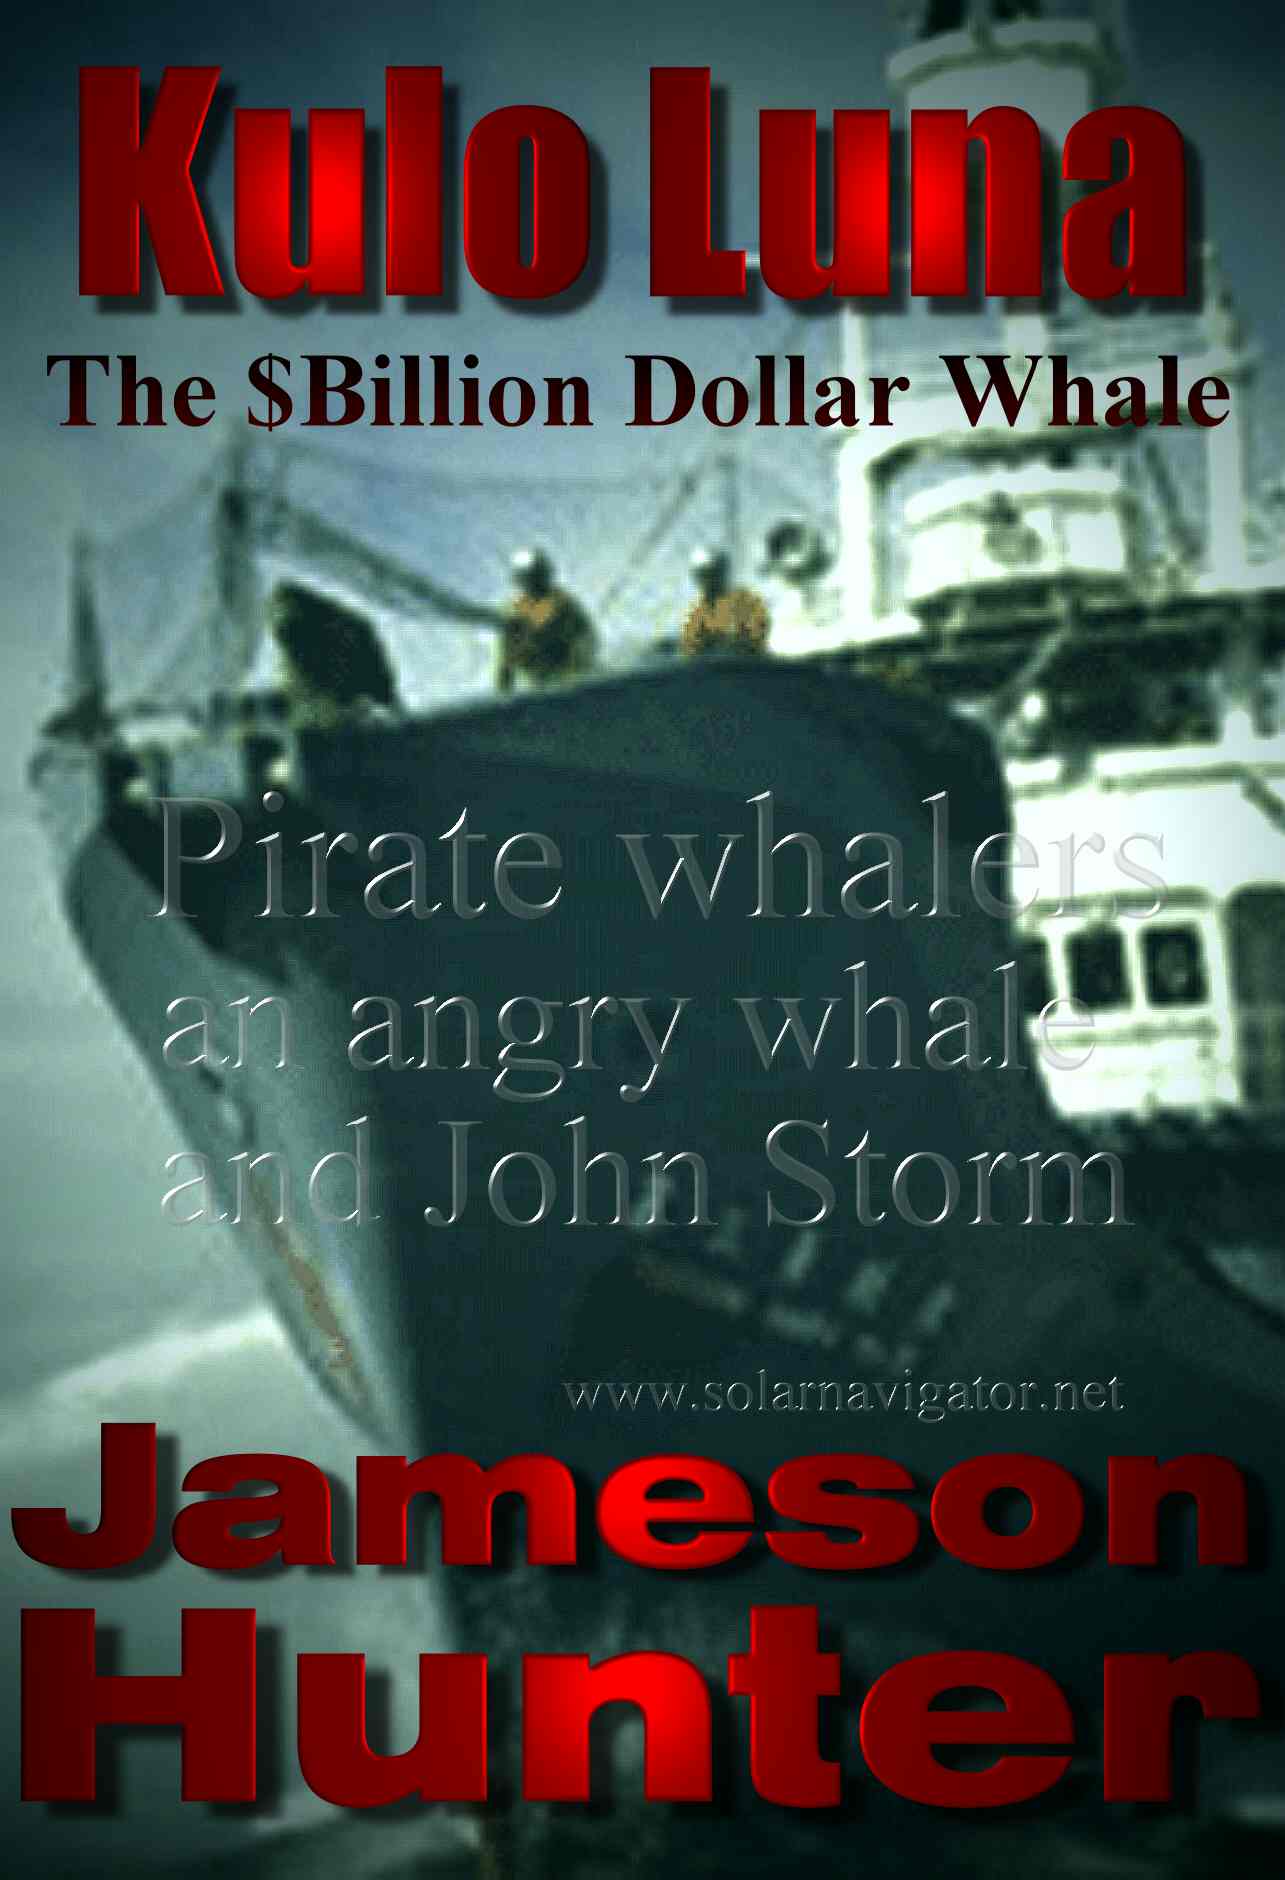 The $Billion Dollar whale, adventure story with John Storm